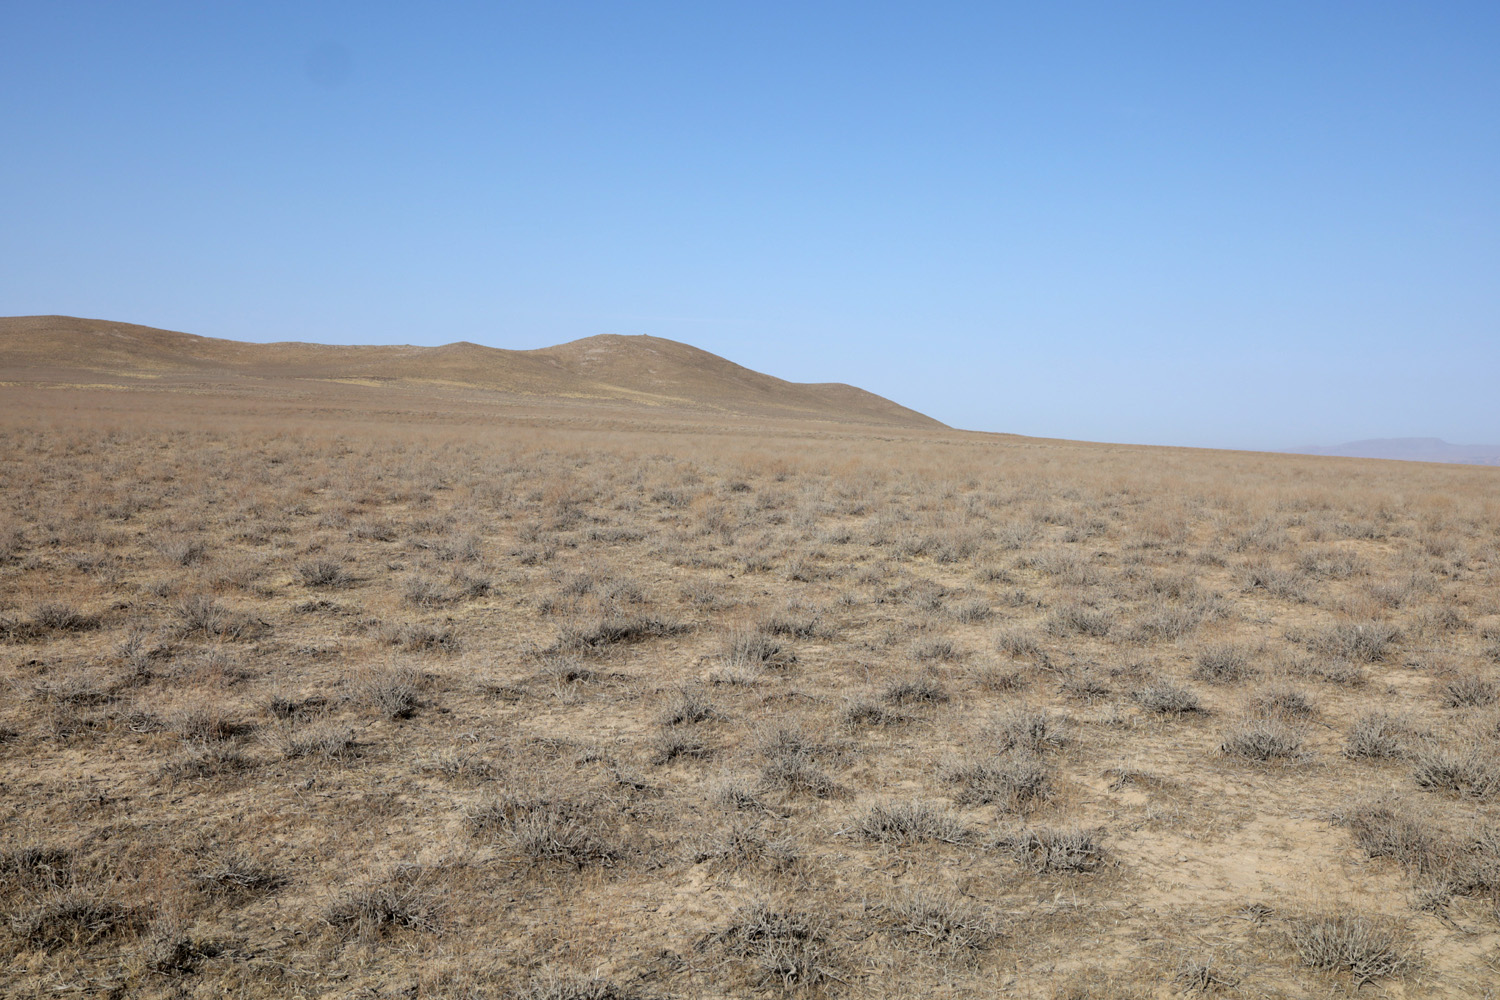 Казахтау, image of landscape/habitat.